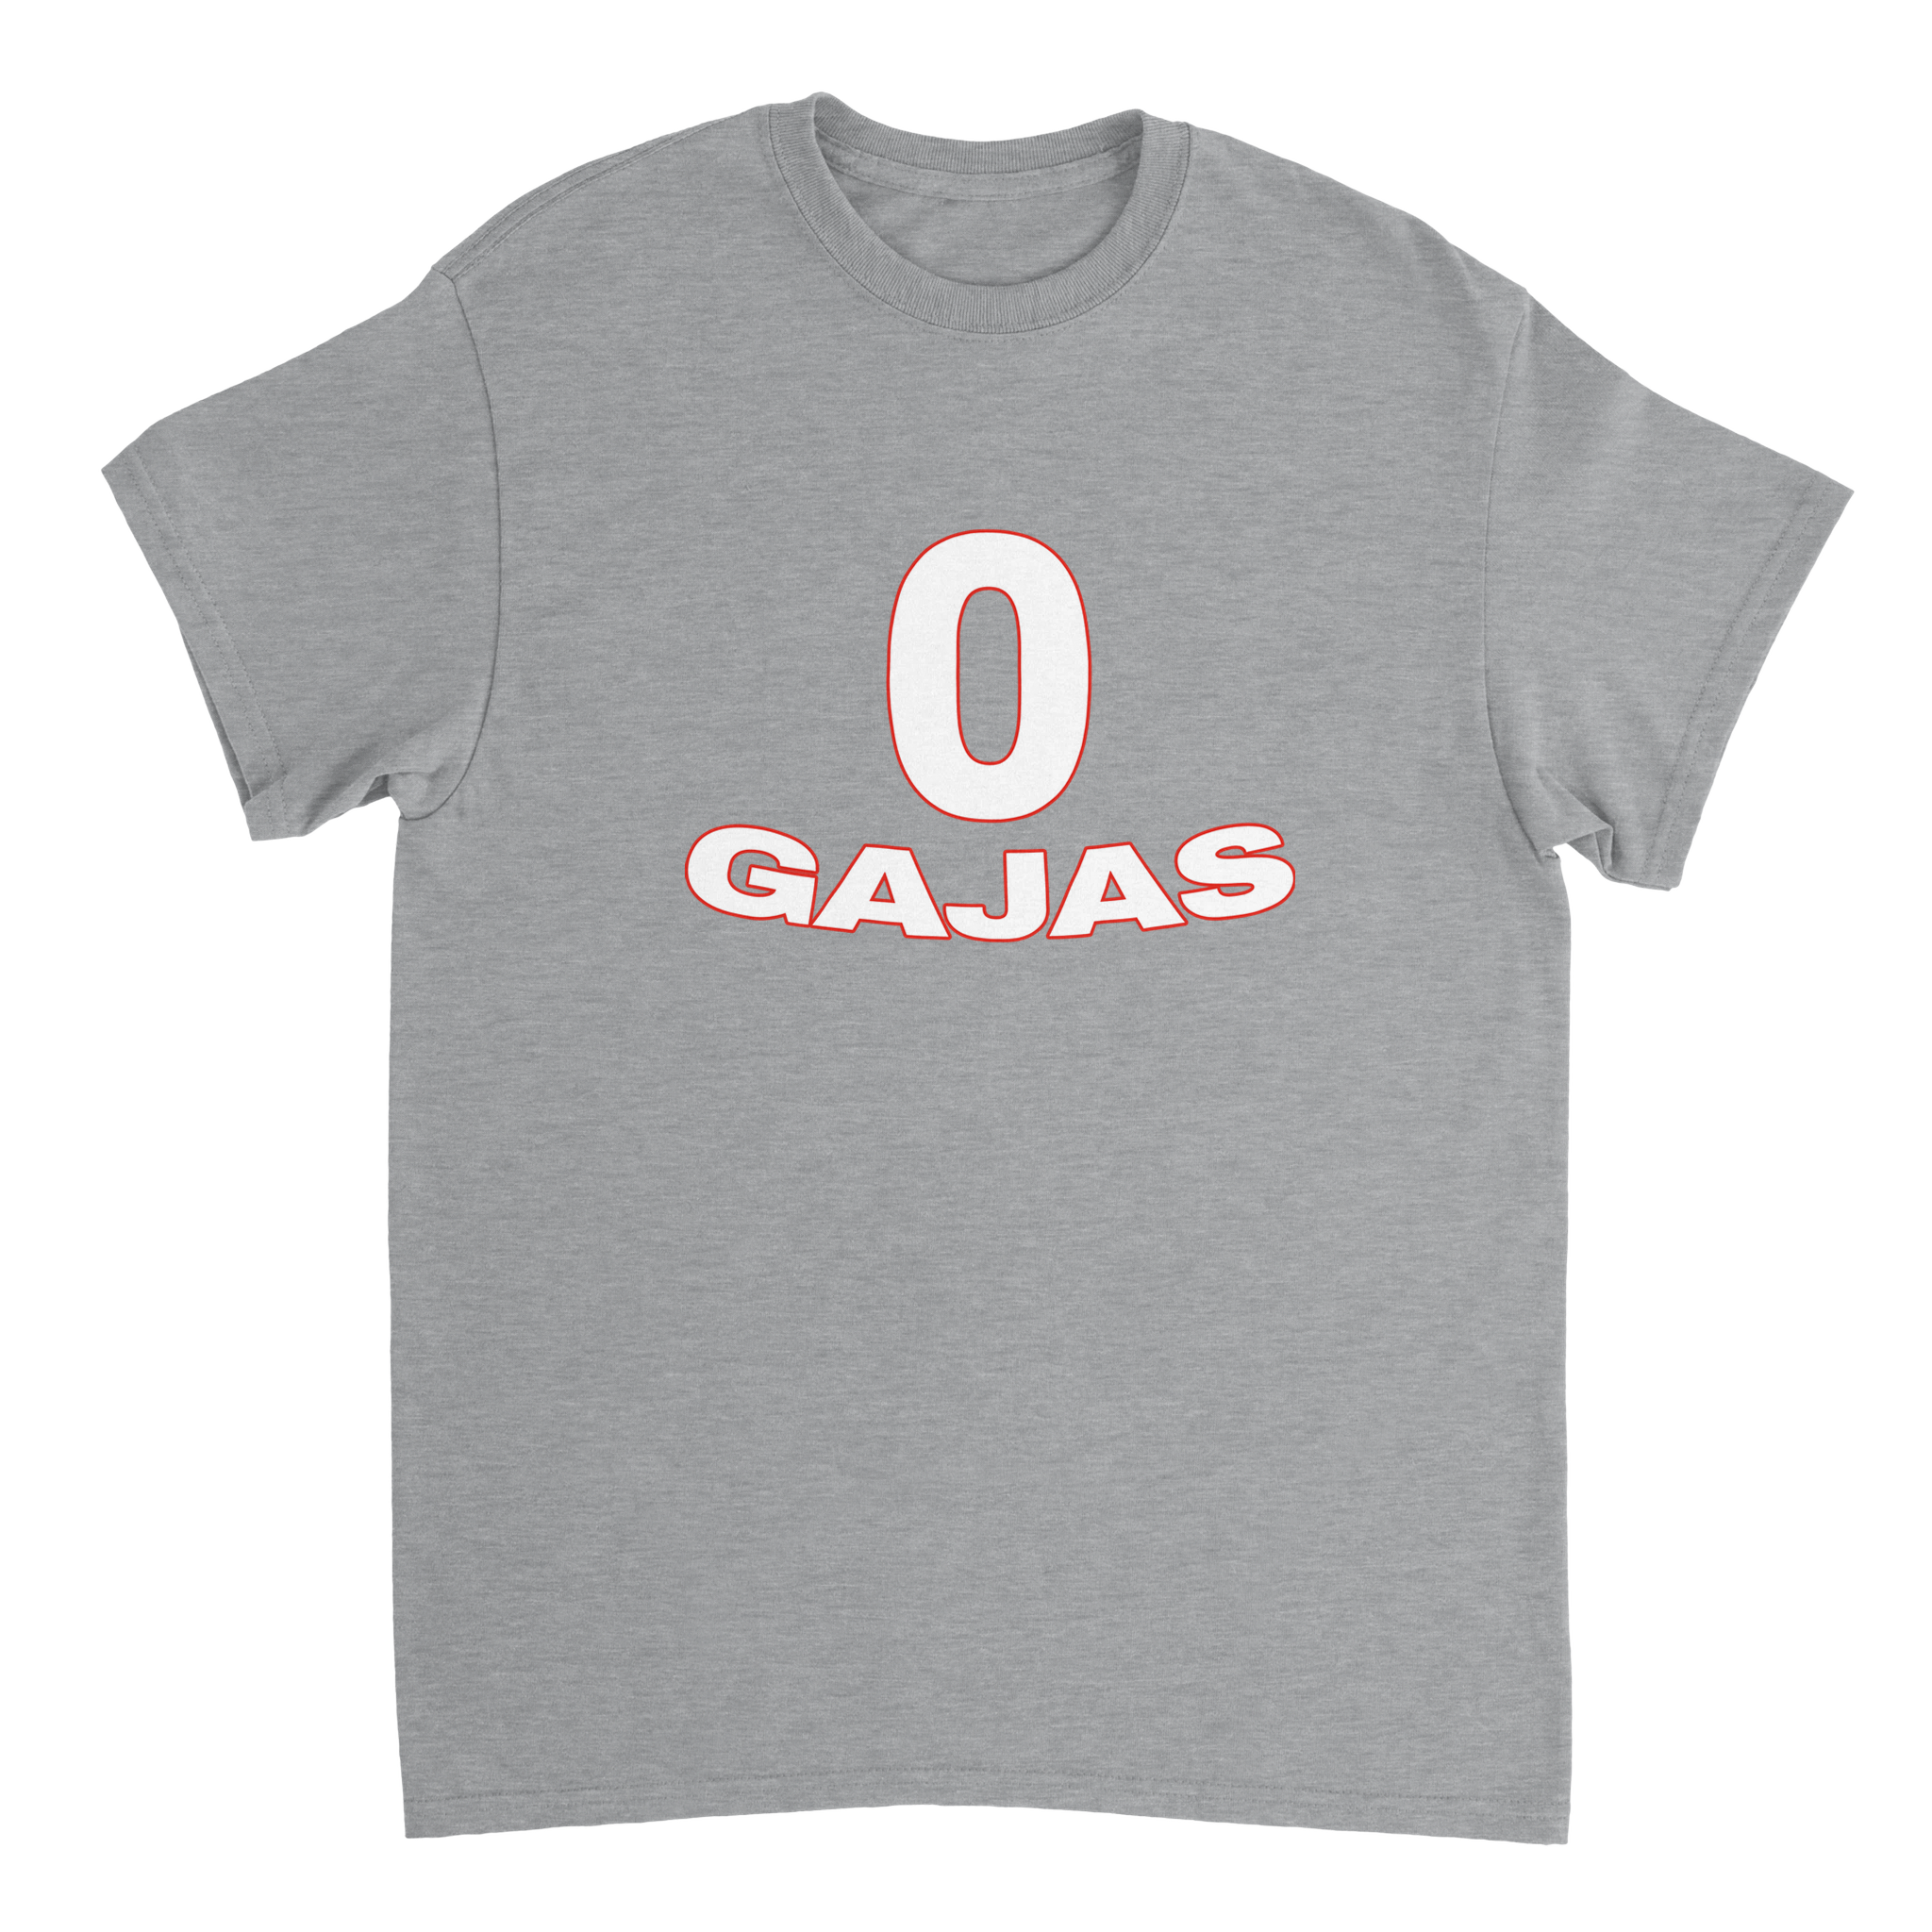 T-shirt 0 Gajas